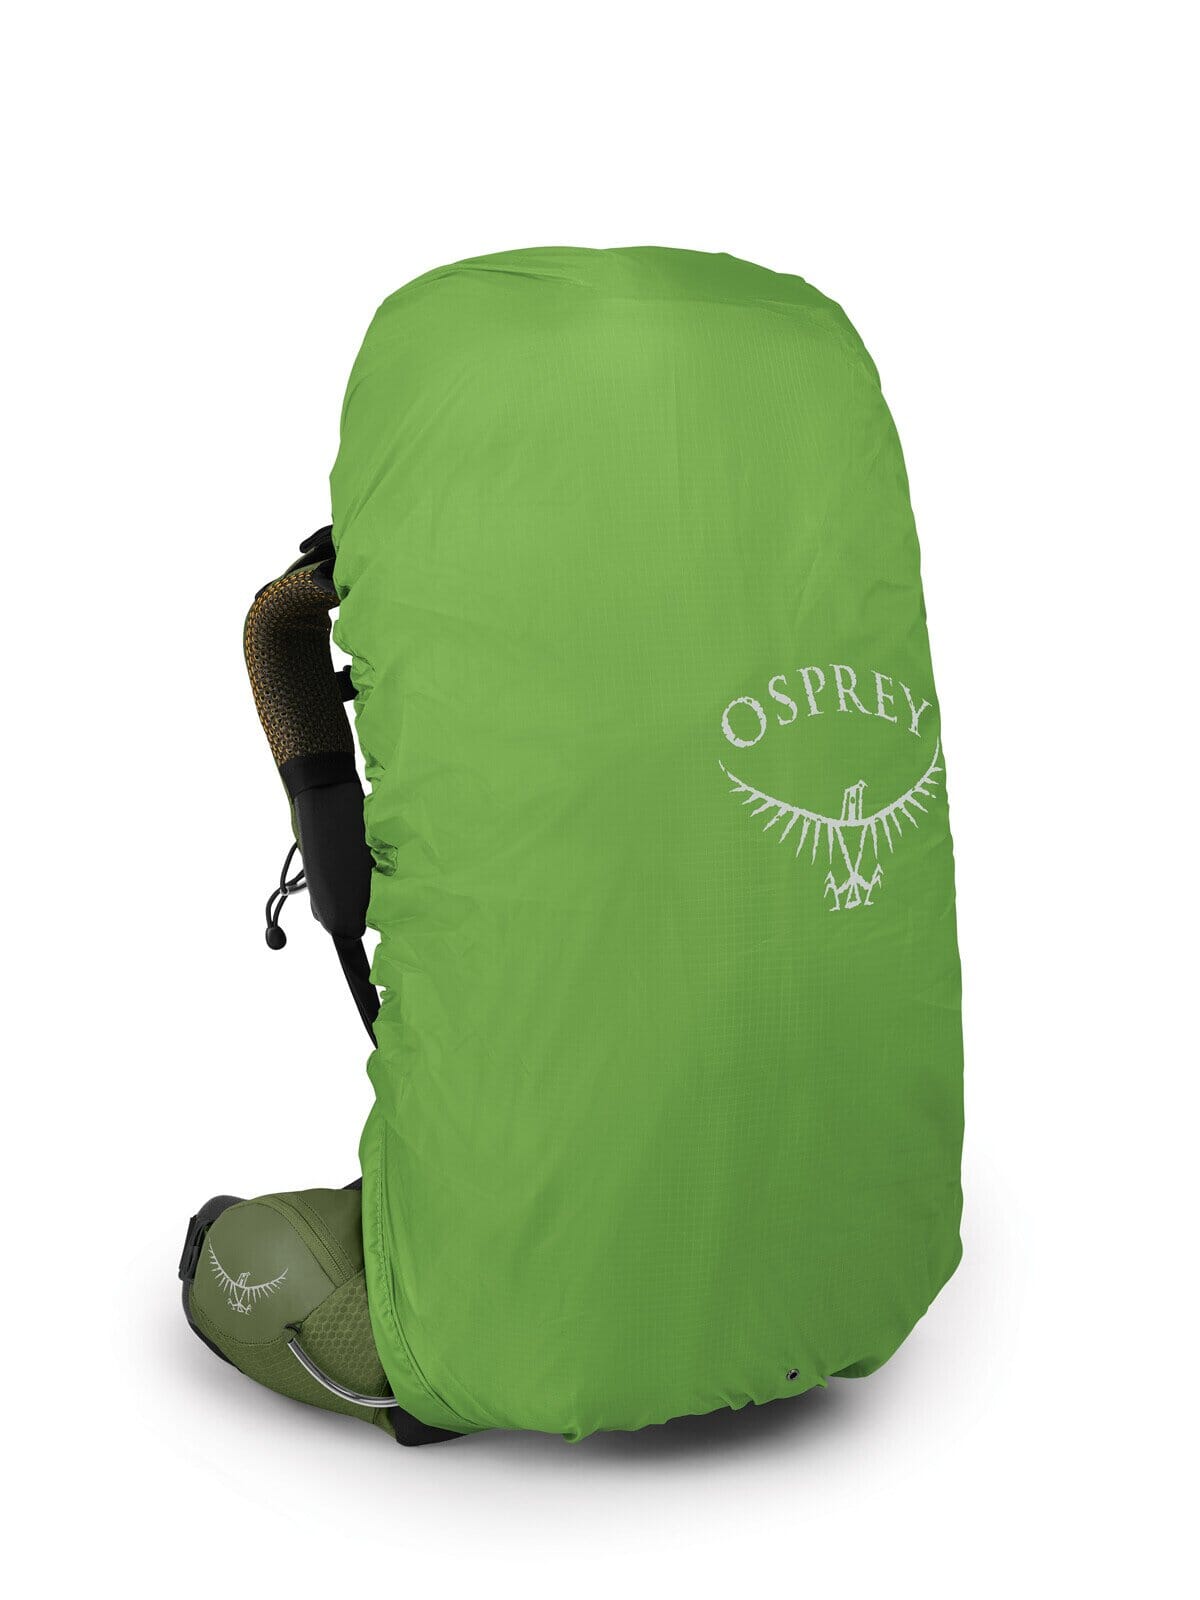 Osprey Atmos AG 50 Litre Backpack Men's Mythical Green S/M 